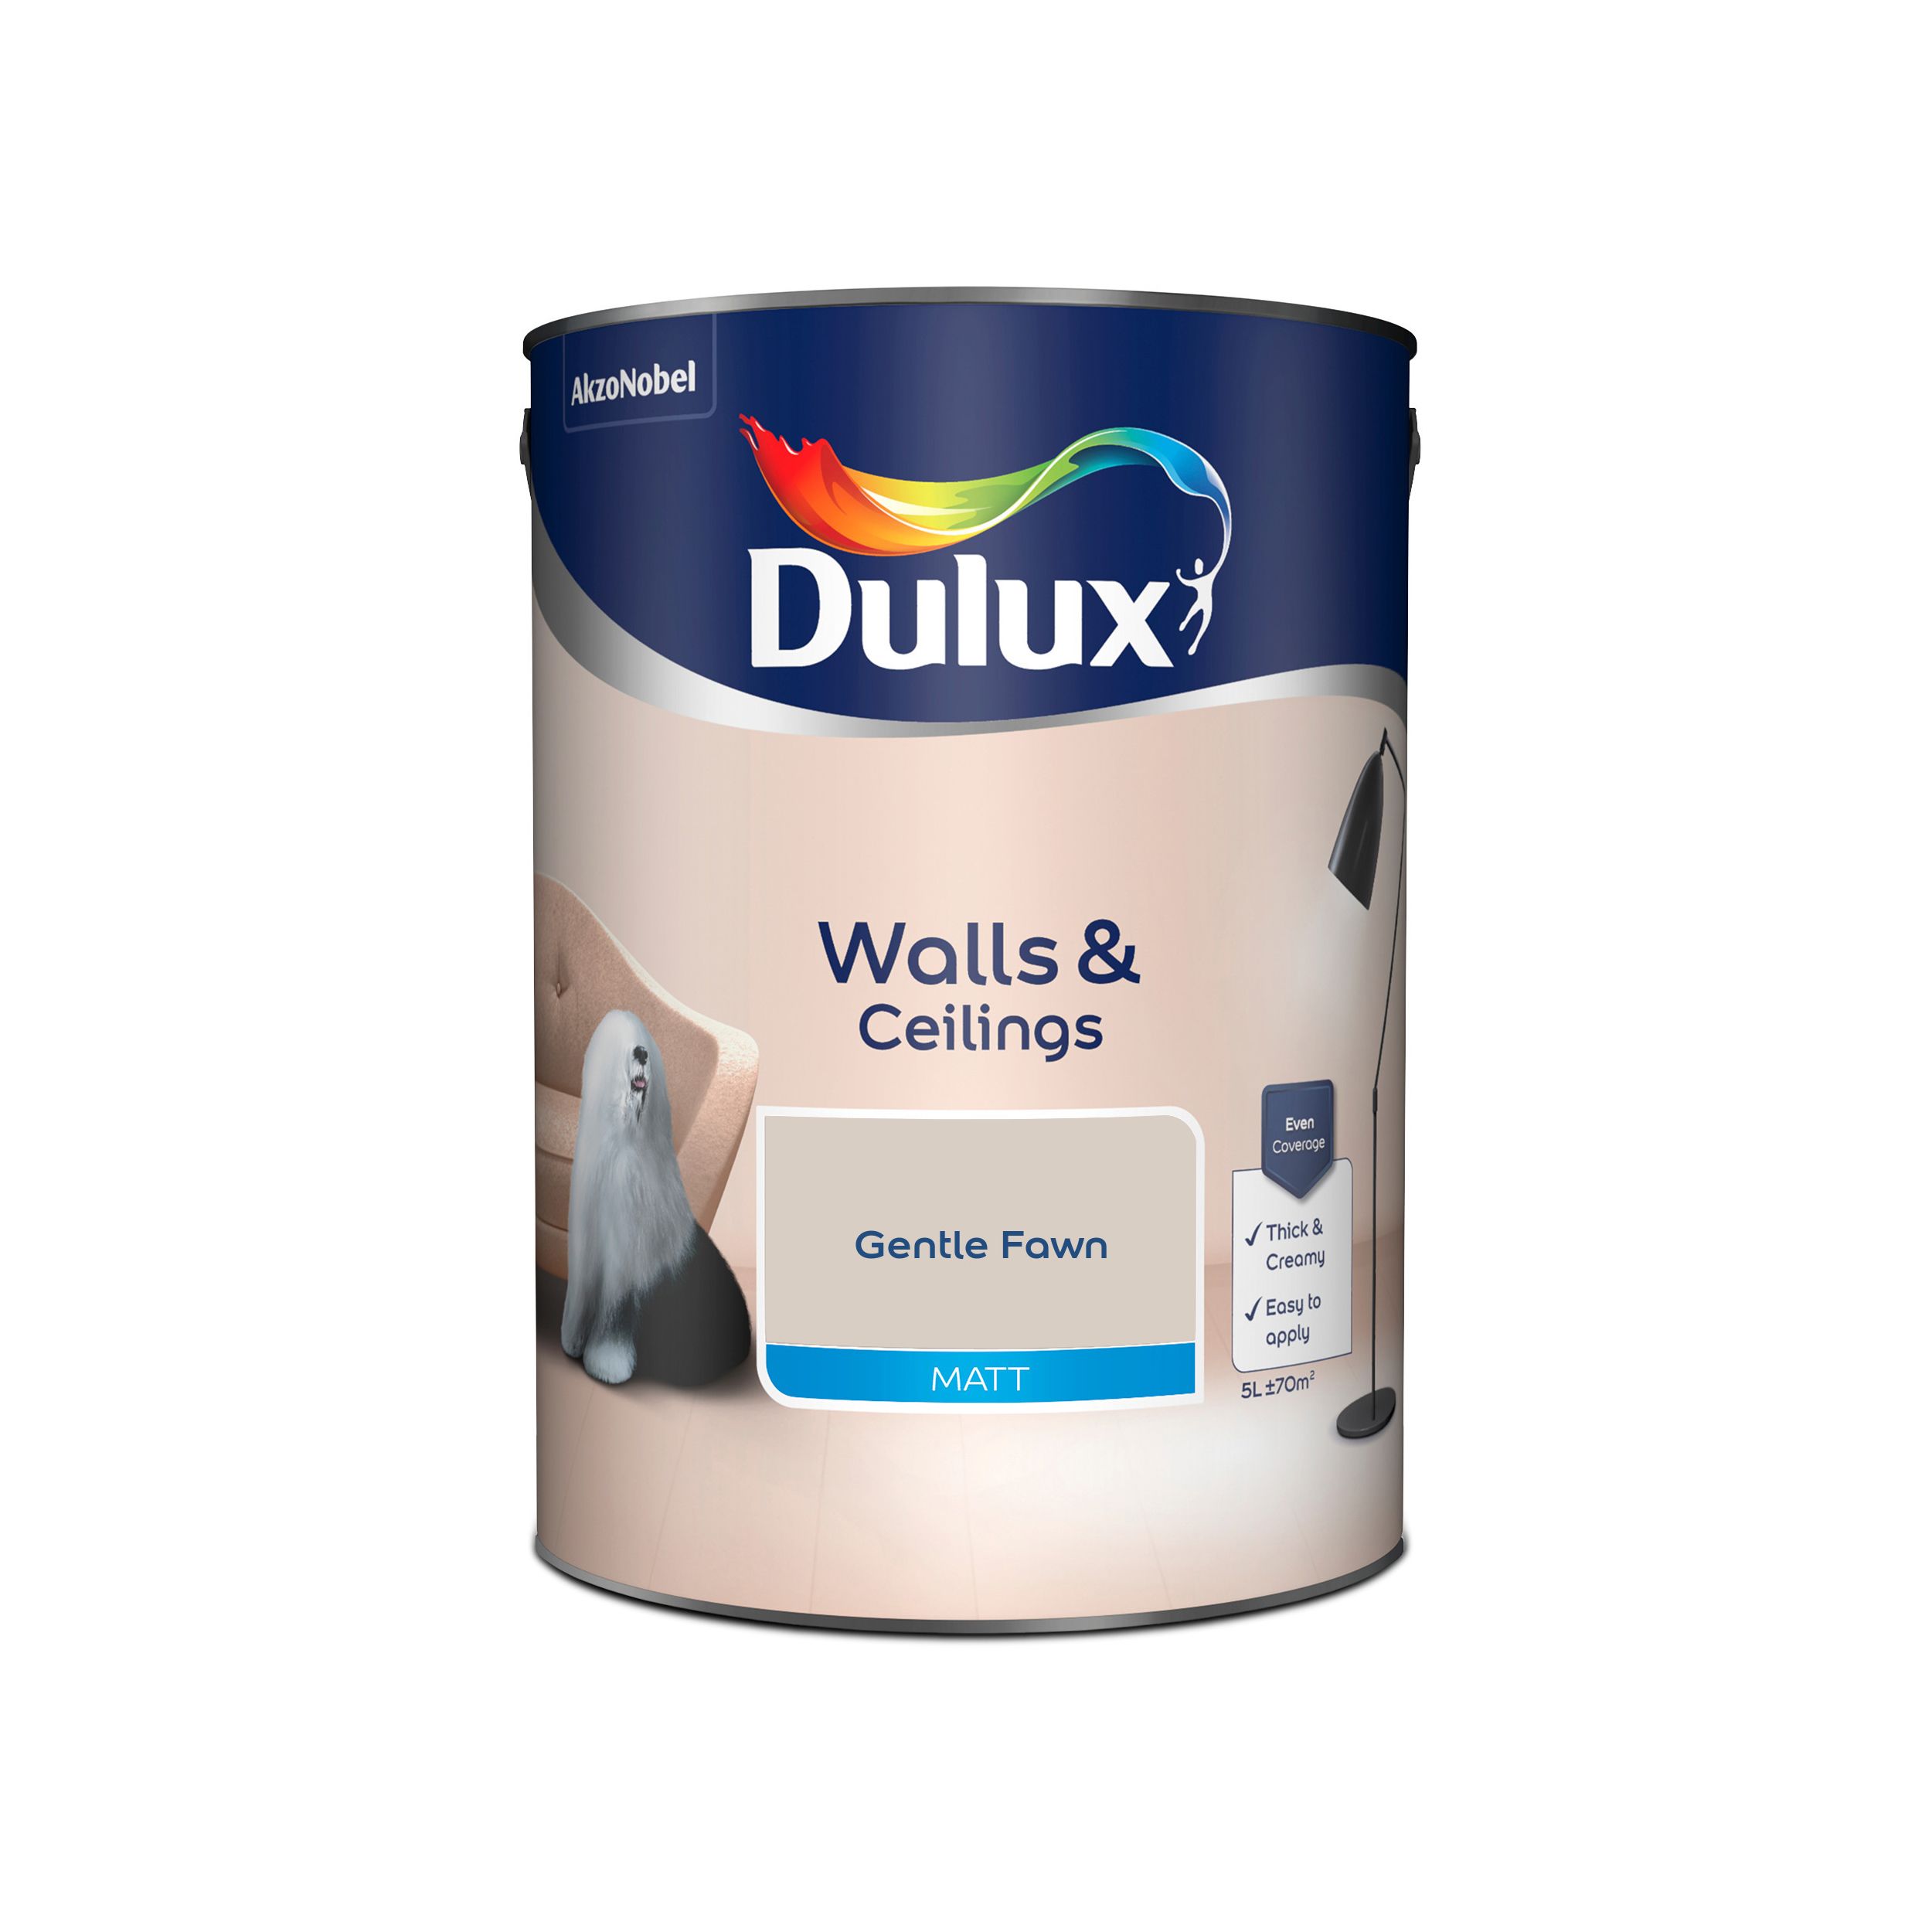 Dulux Walls & ceilings Gentle fawn Matt Emulsion paint, 5L